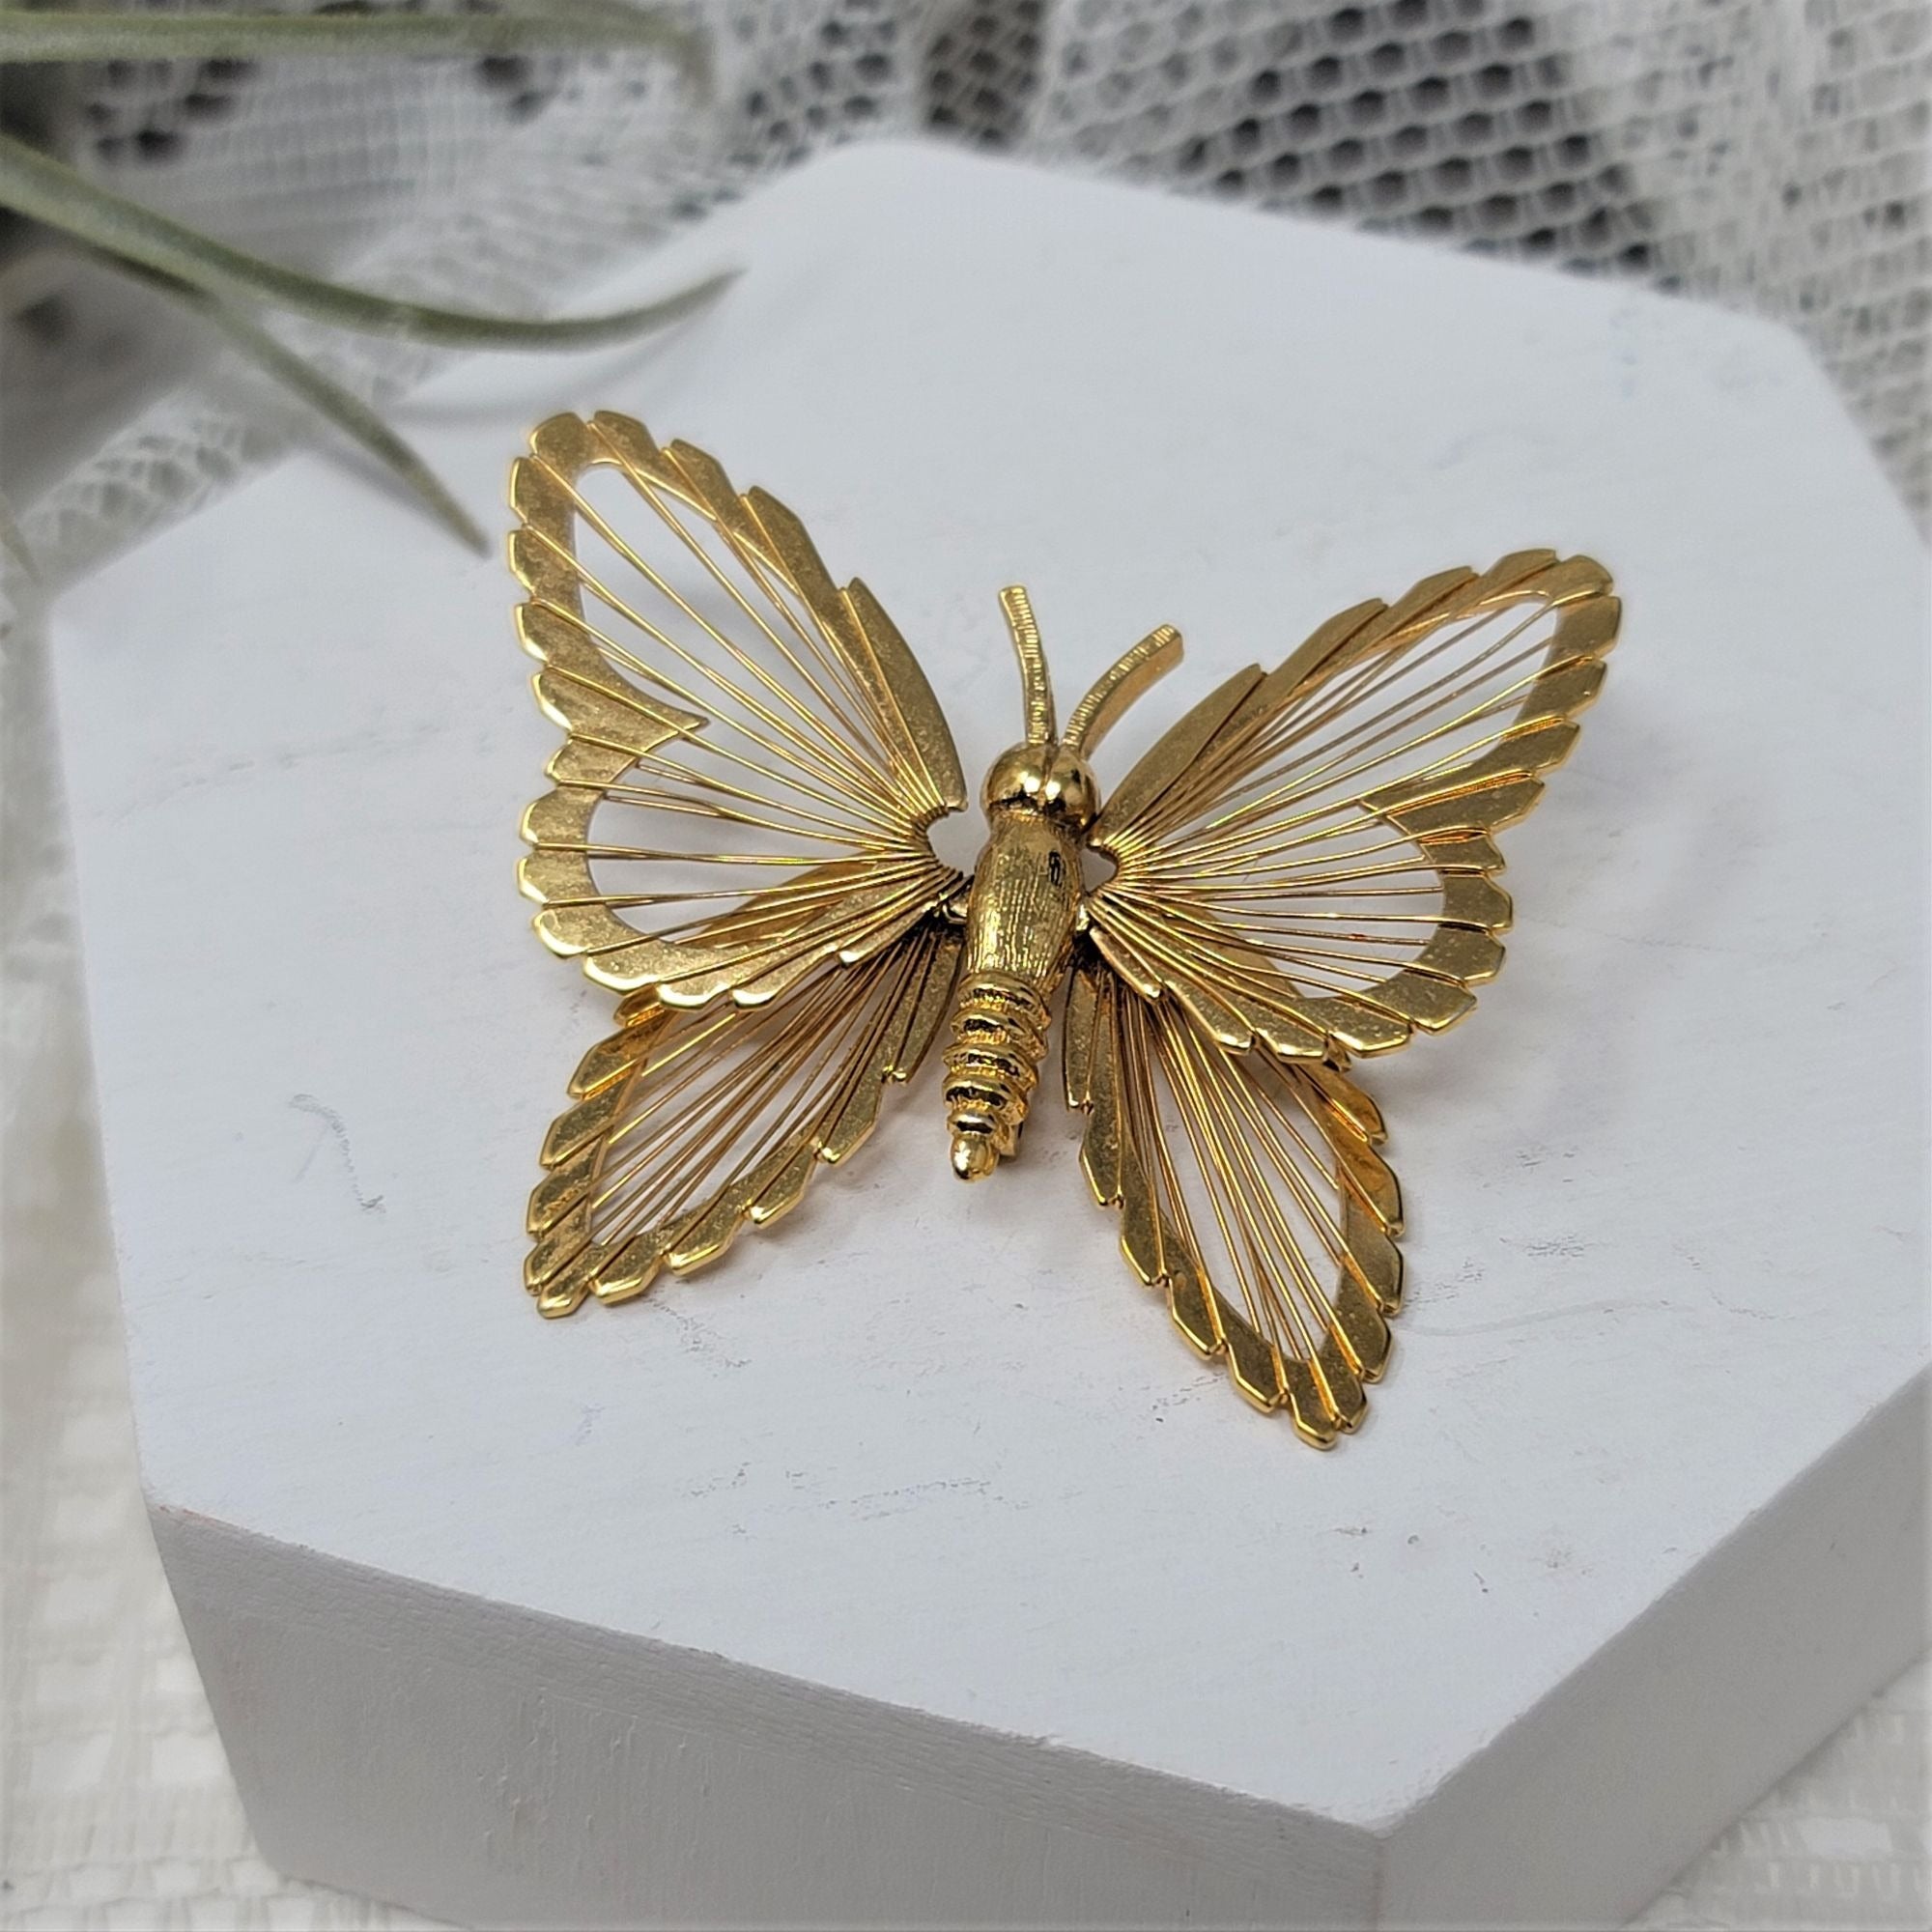 Vintage Butterfly Pin Brooch Goldtone Detailed Wings